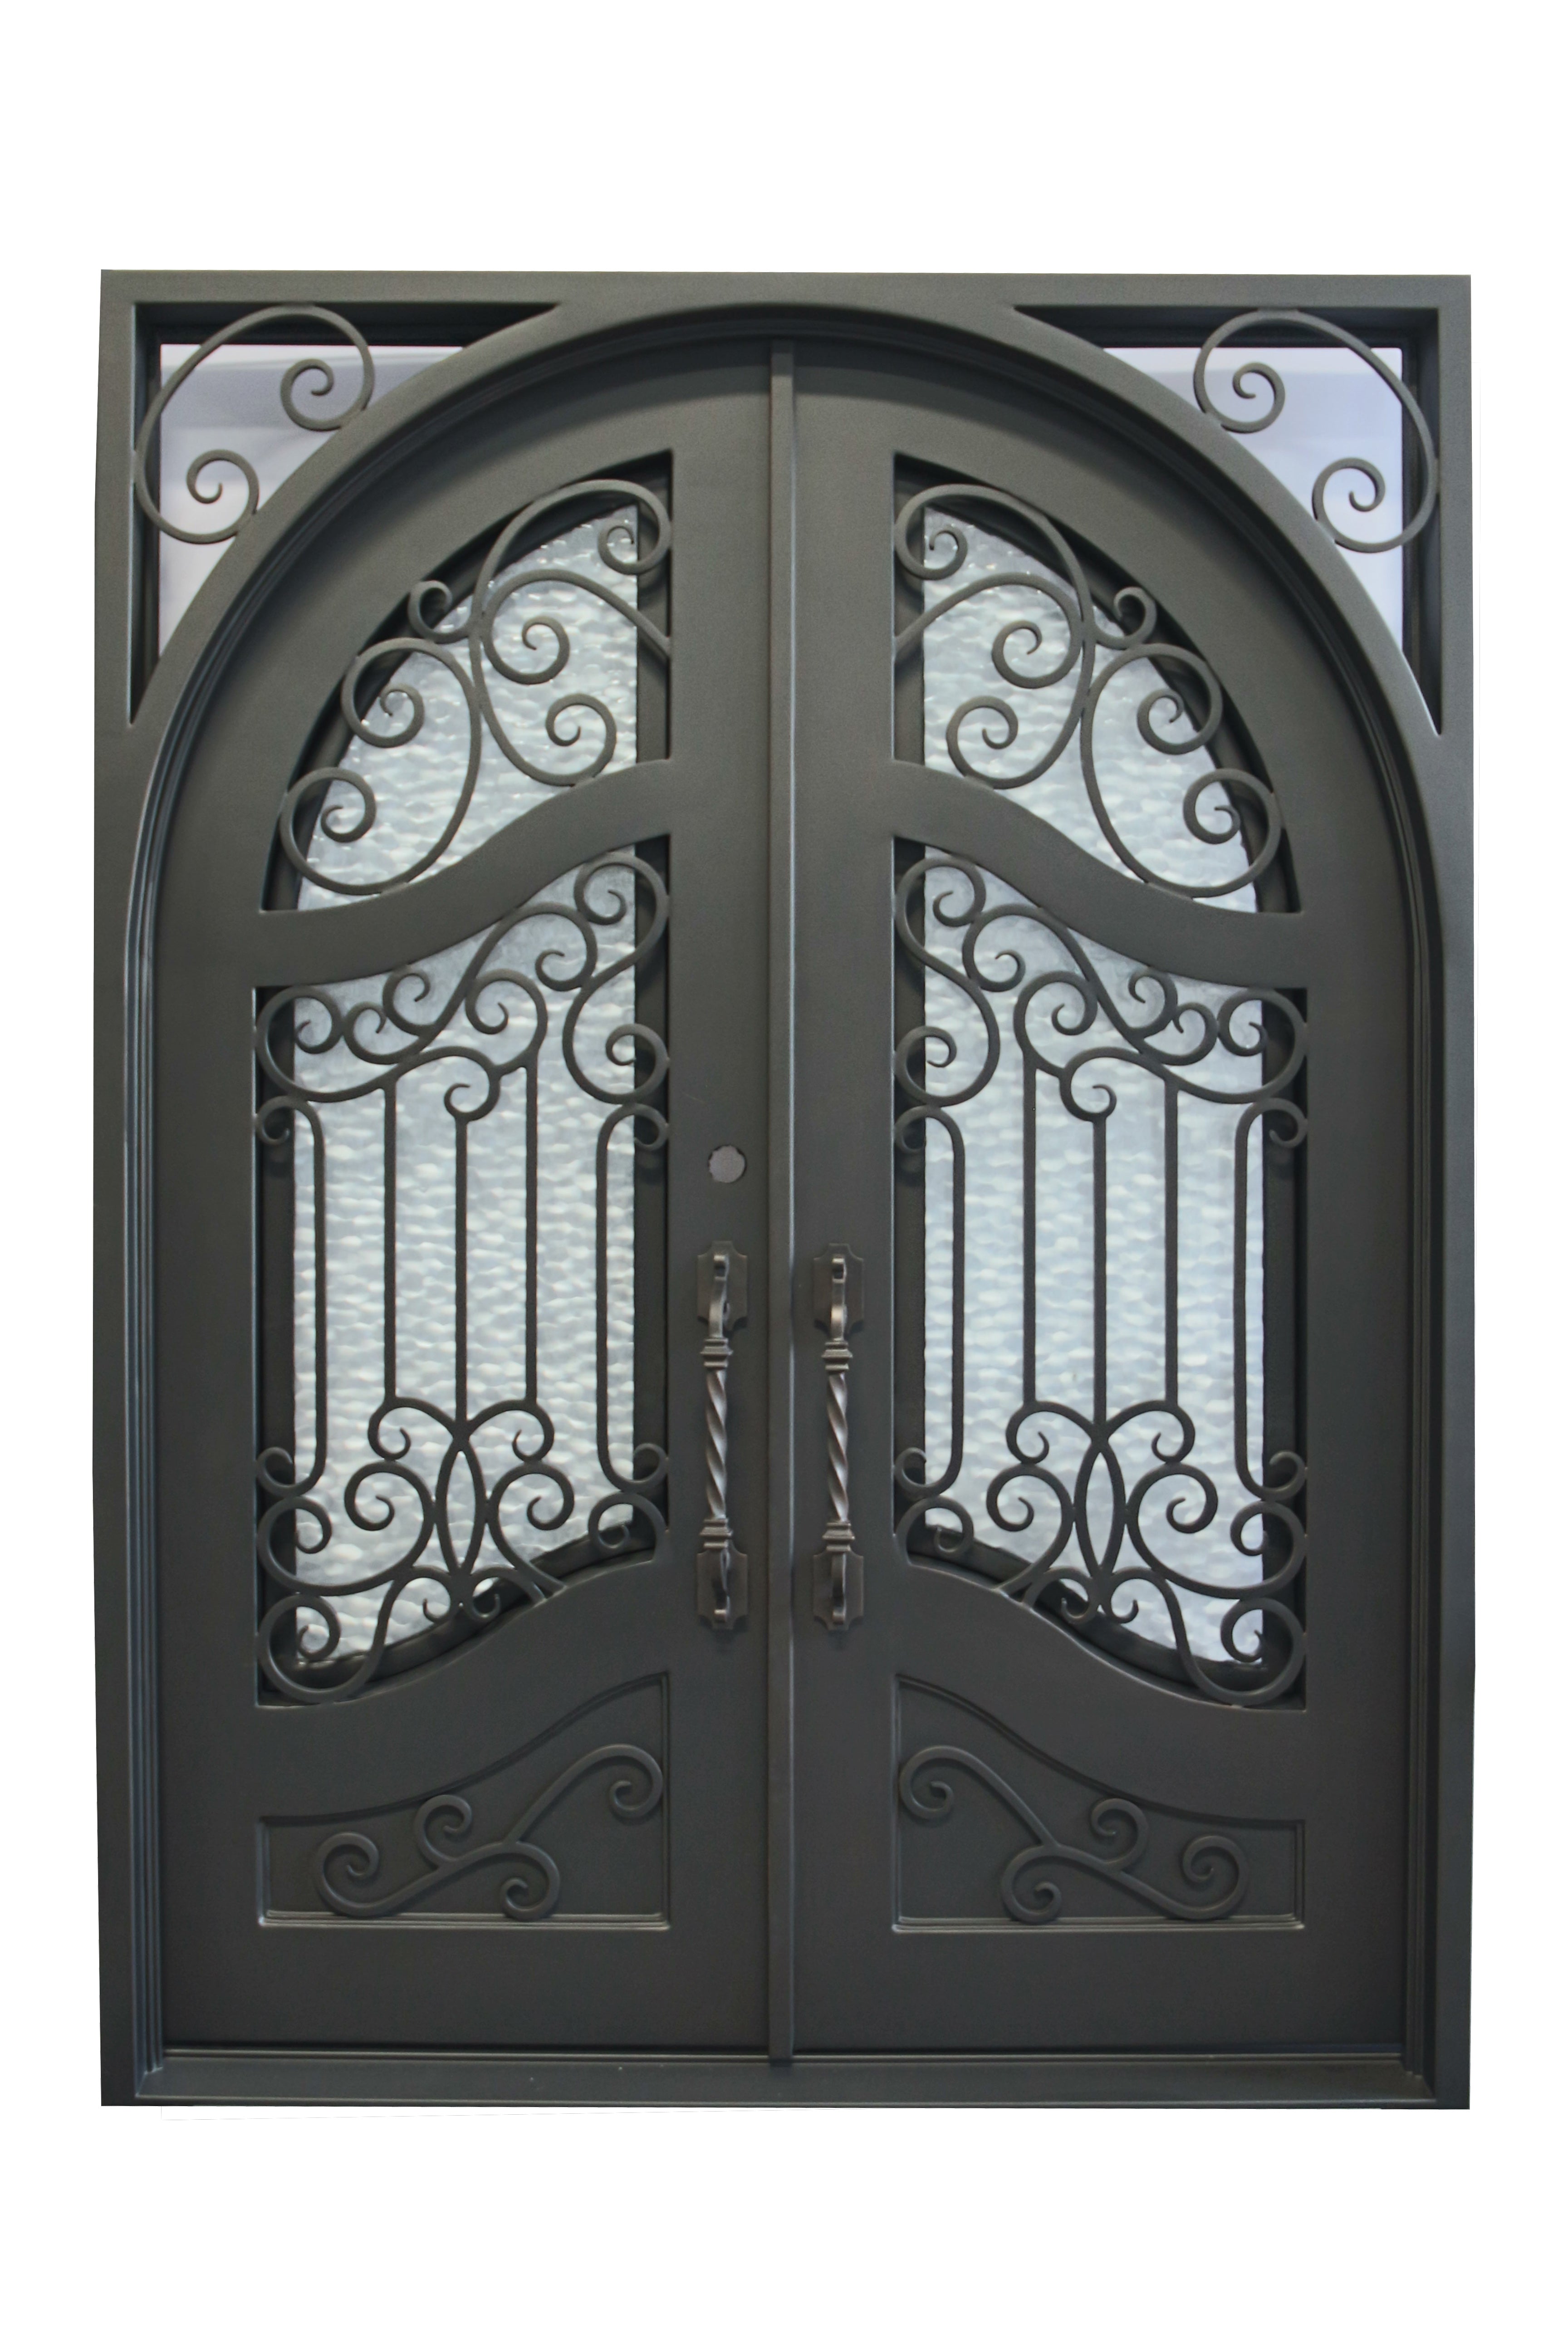 Calvert Model Double Front Entry Iron Door With Tempered Water Cube Glass Dark Bronze Finish - AAWAIZ IMPORTS